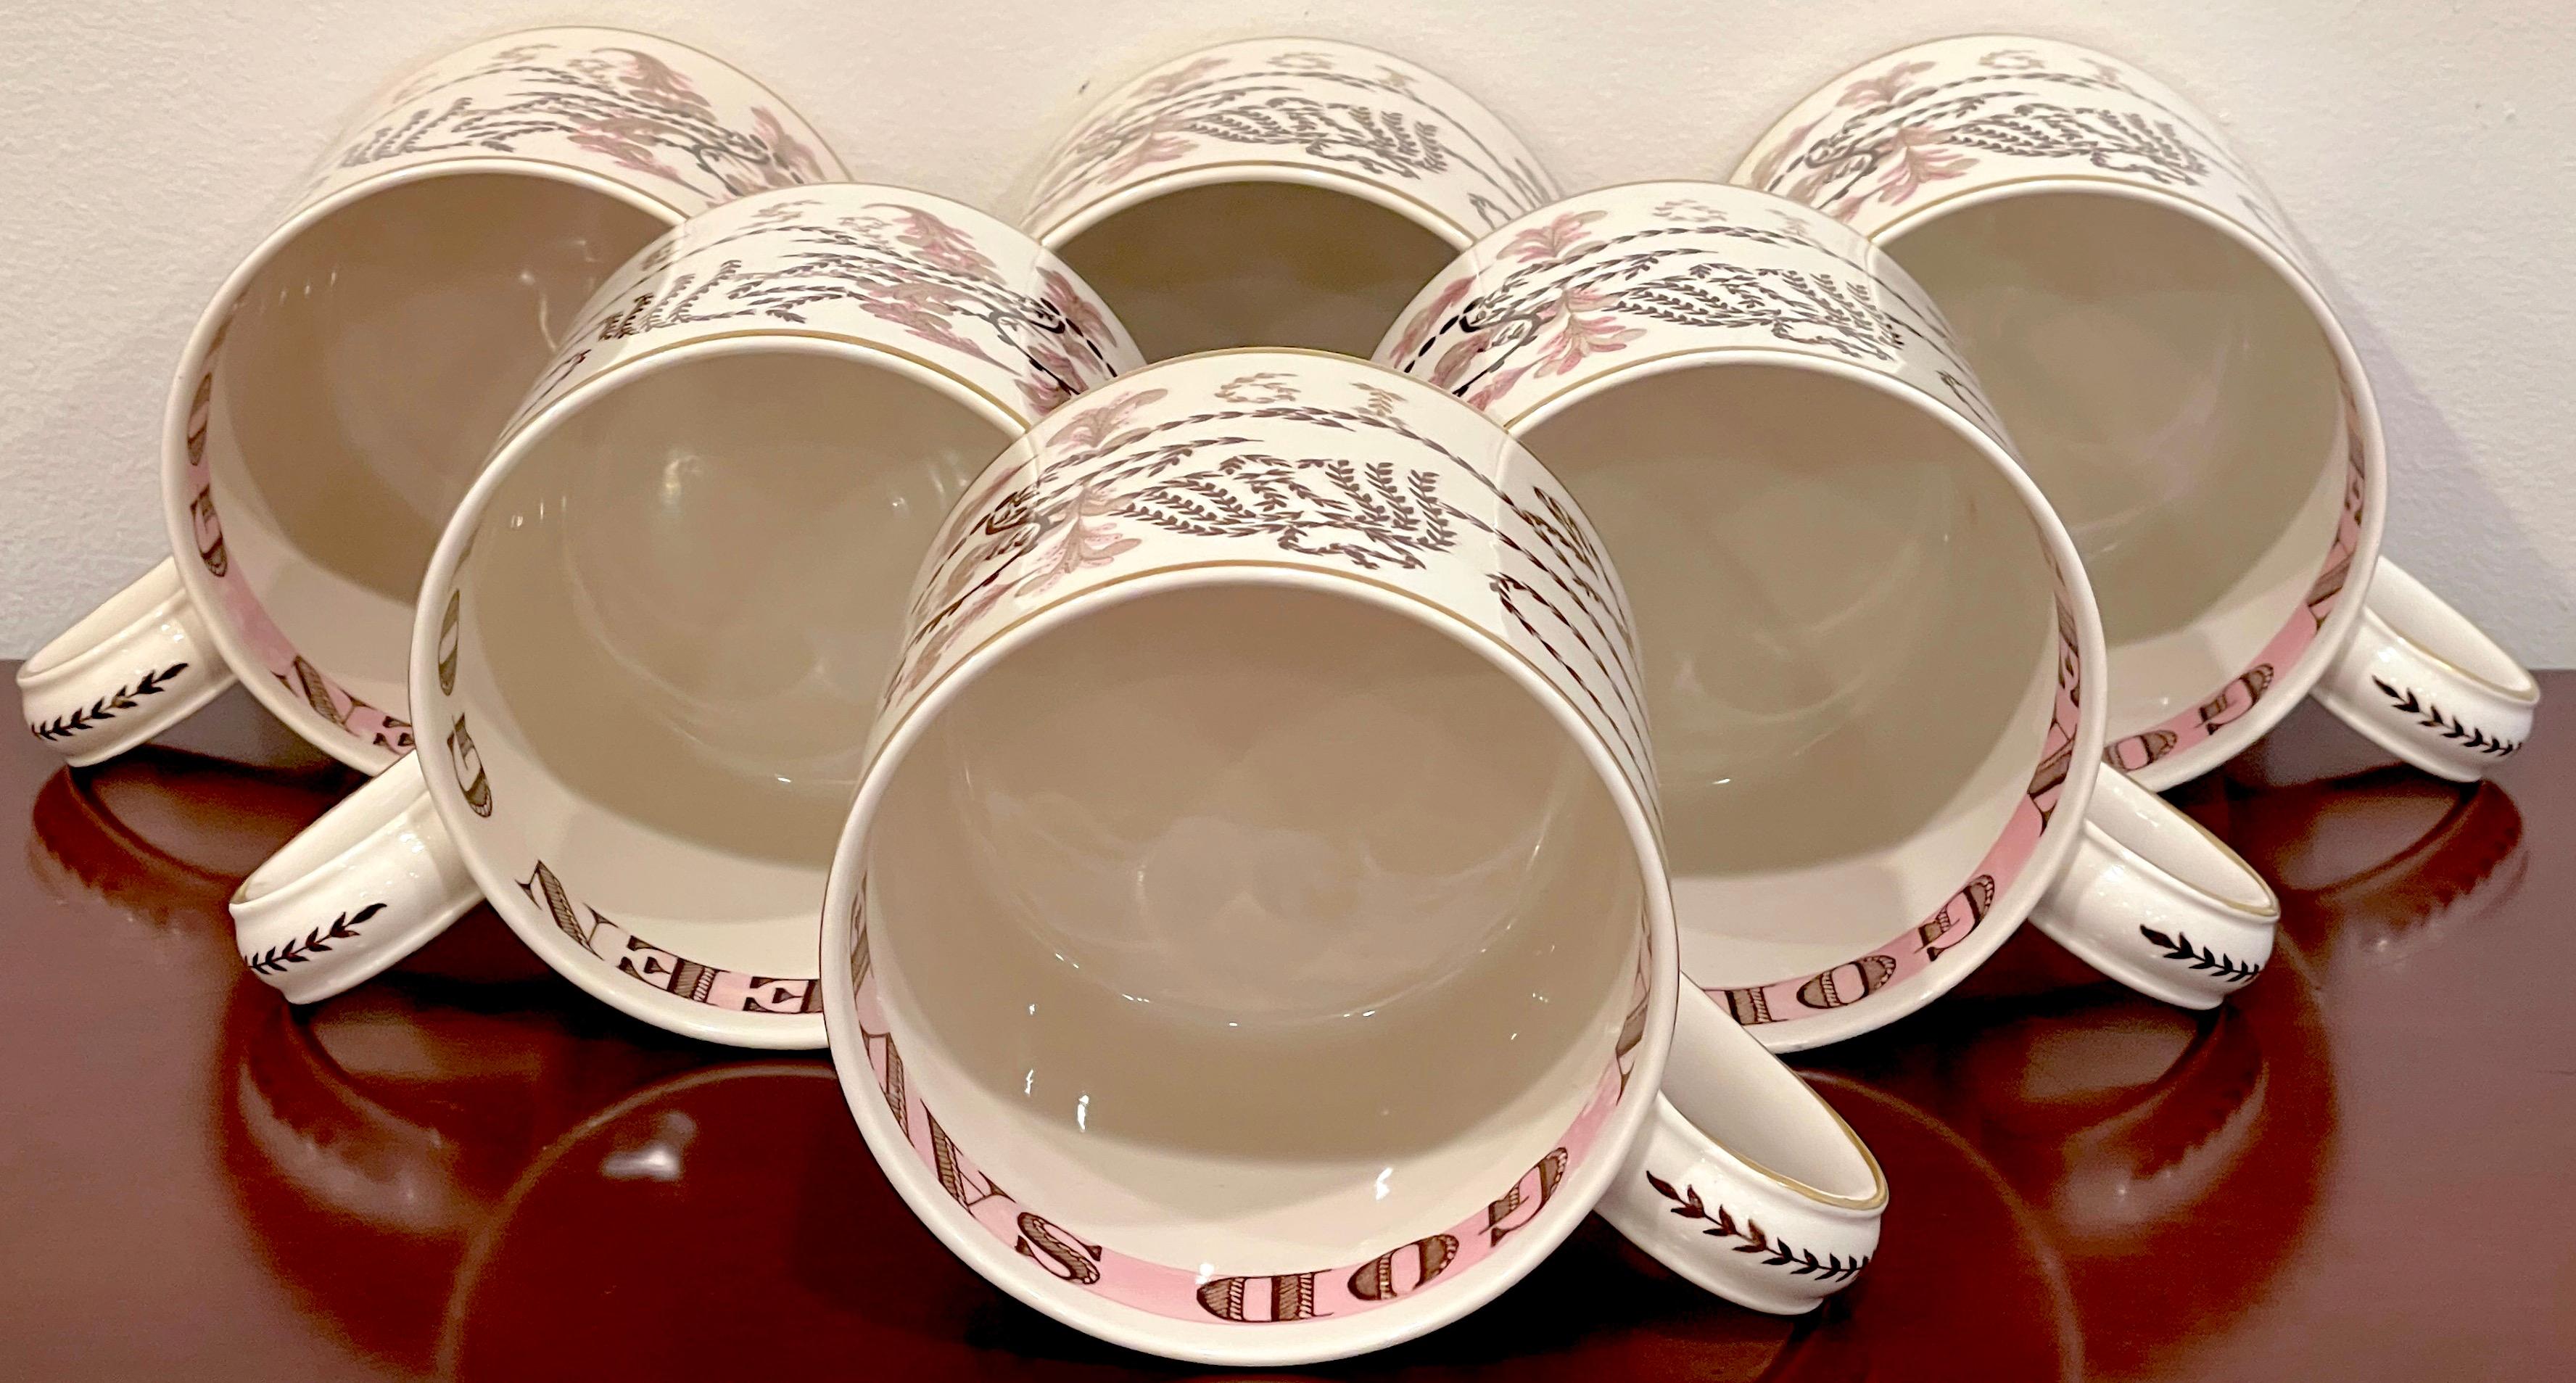 queen elizabeth commemorative mugs